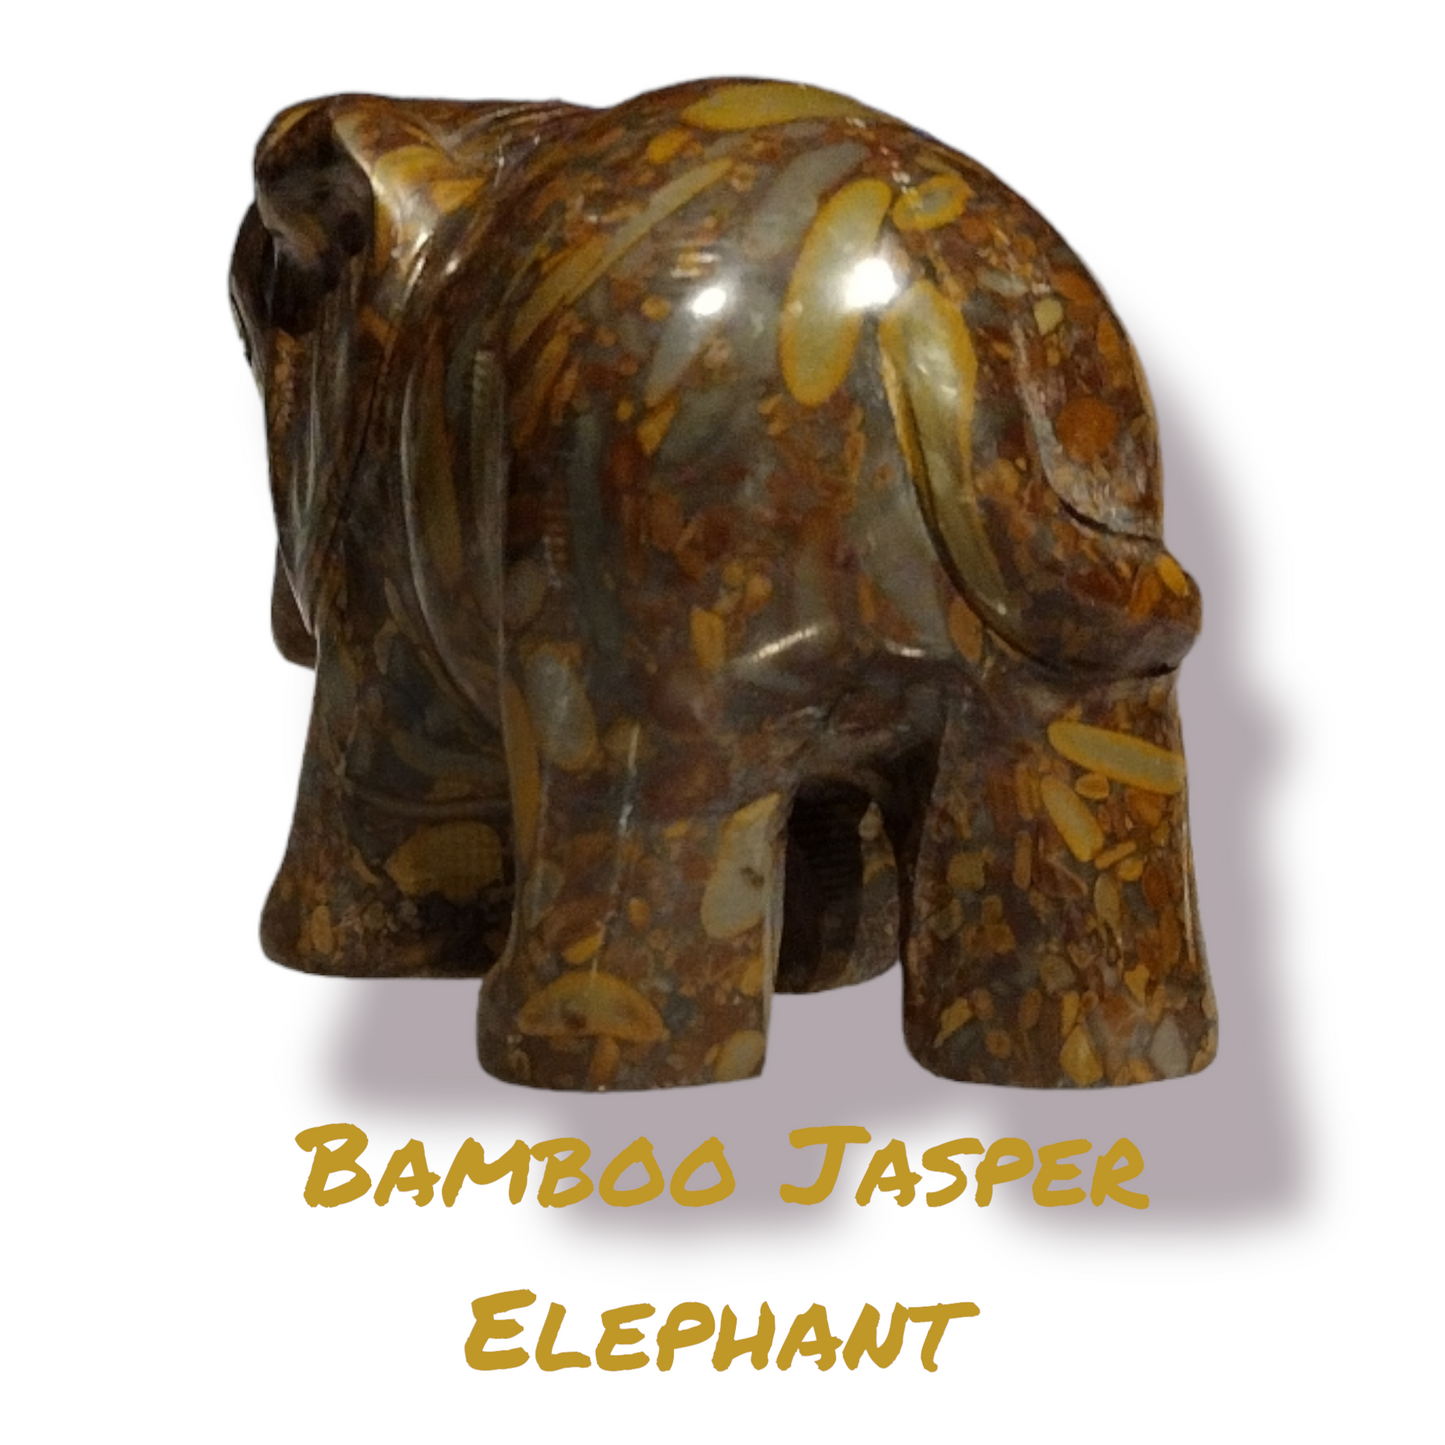 Bamboo Jasper Elephant